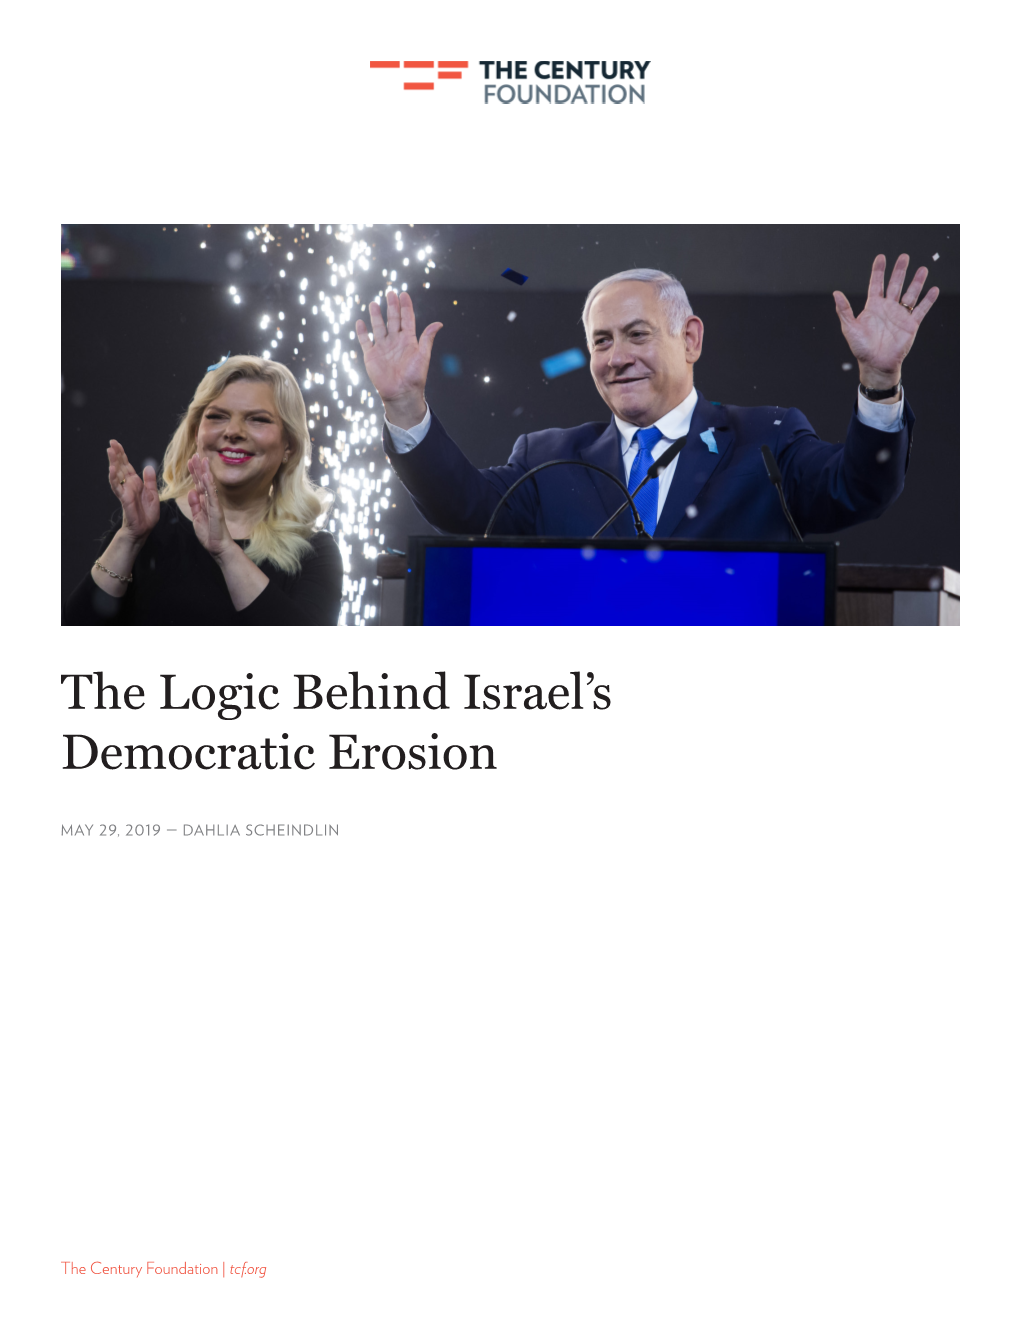 The Logic Behind Israel's Democratic Erosion